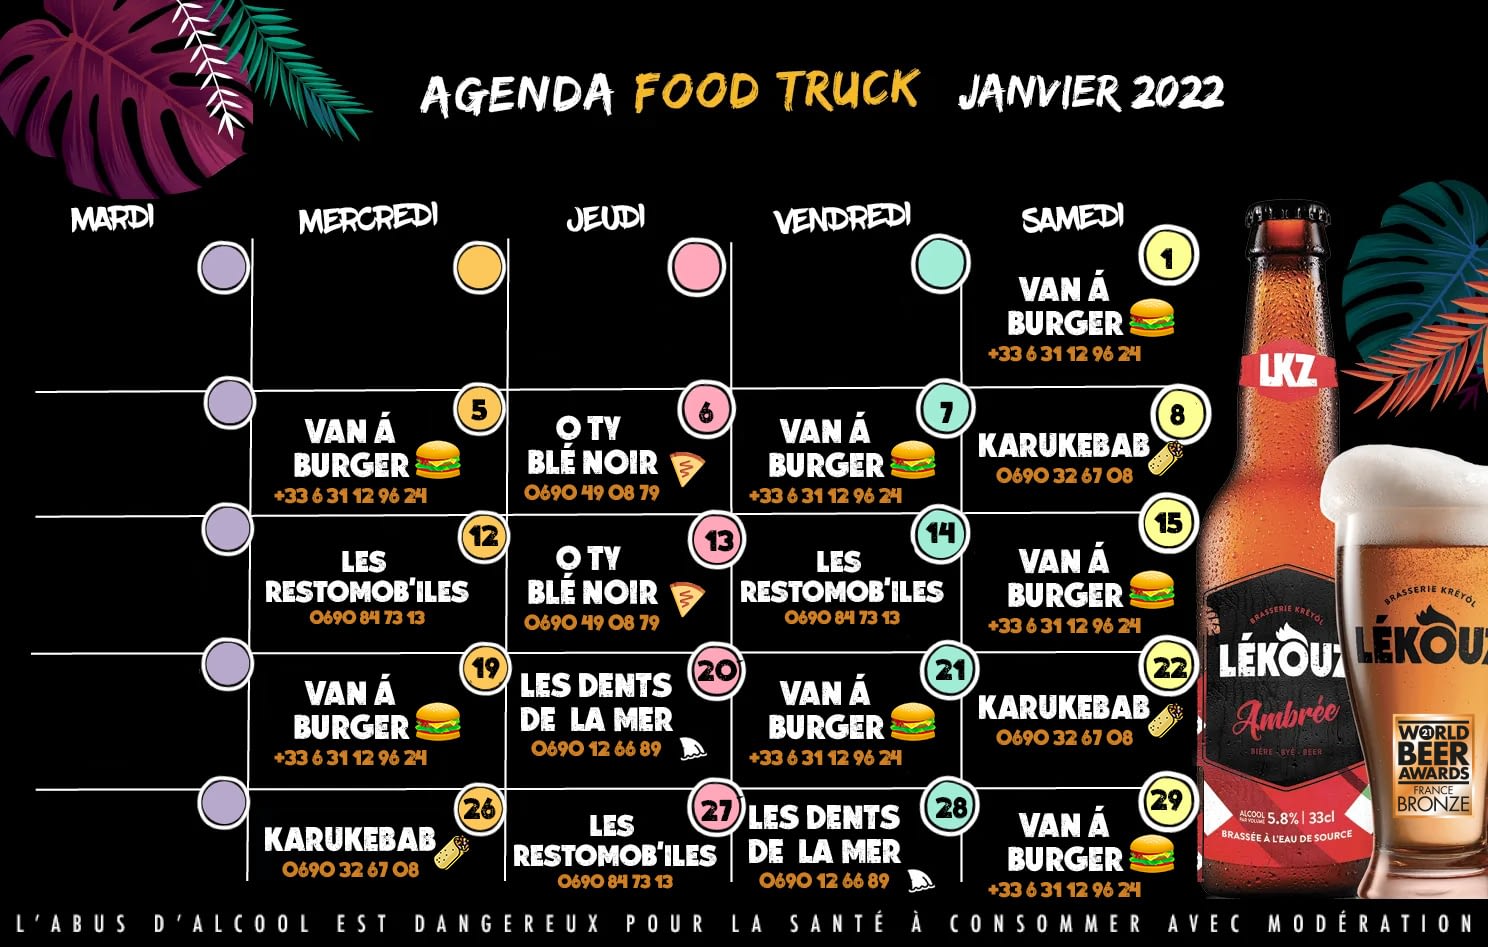 AGENDA-FOOD-TRUCK-JANVIER-2022